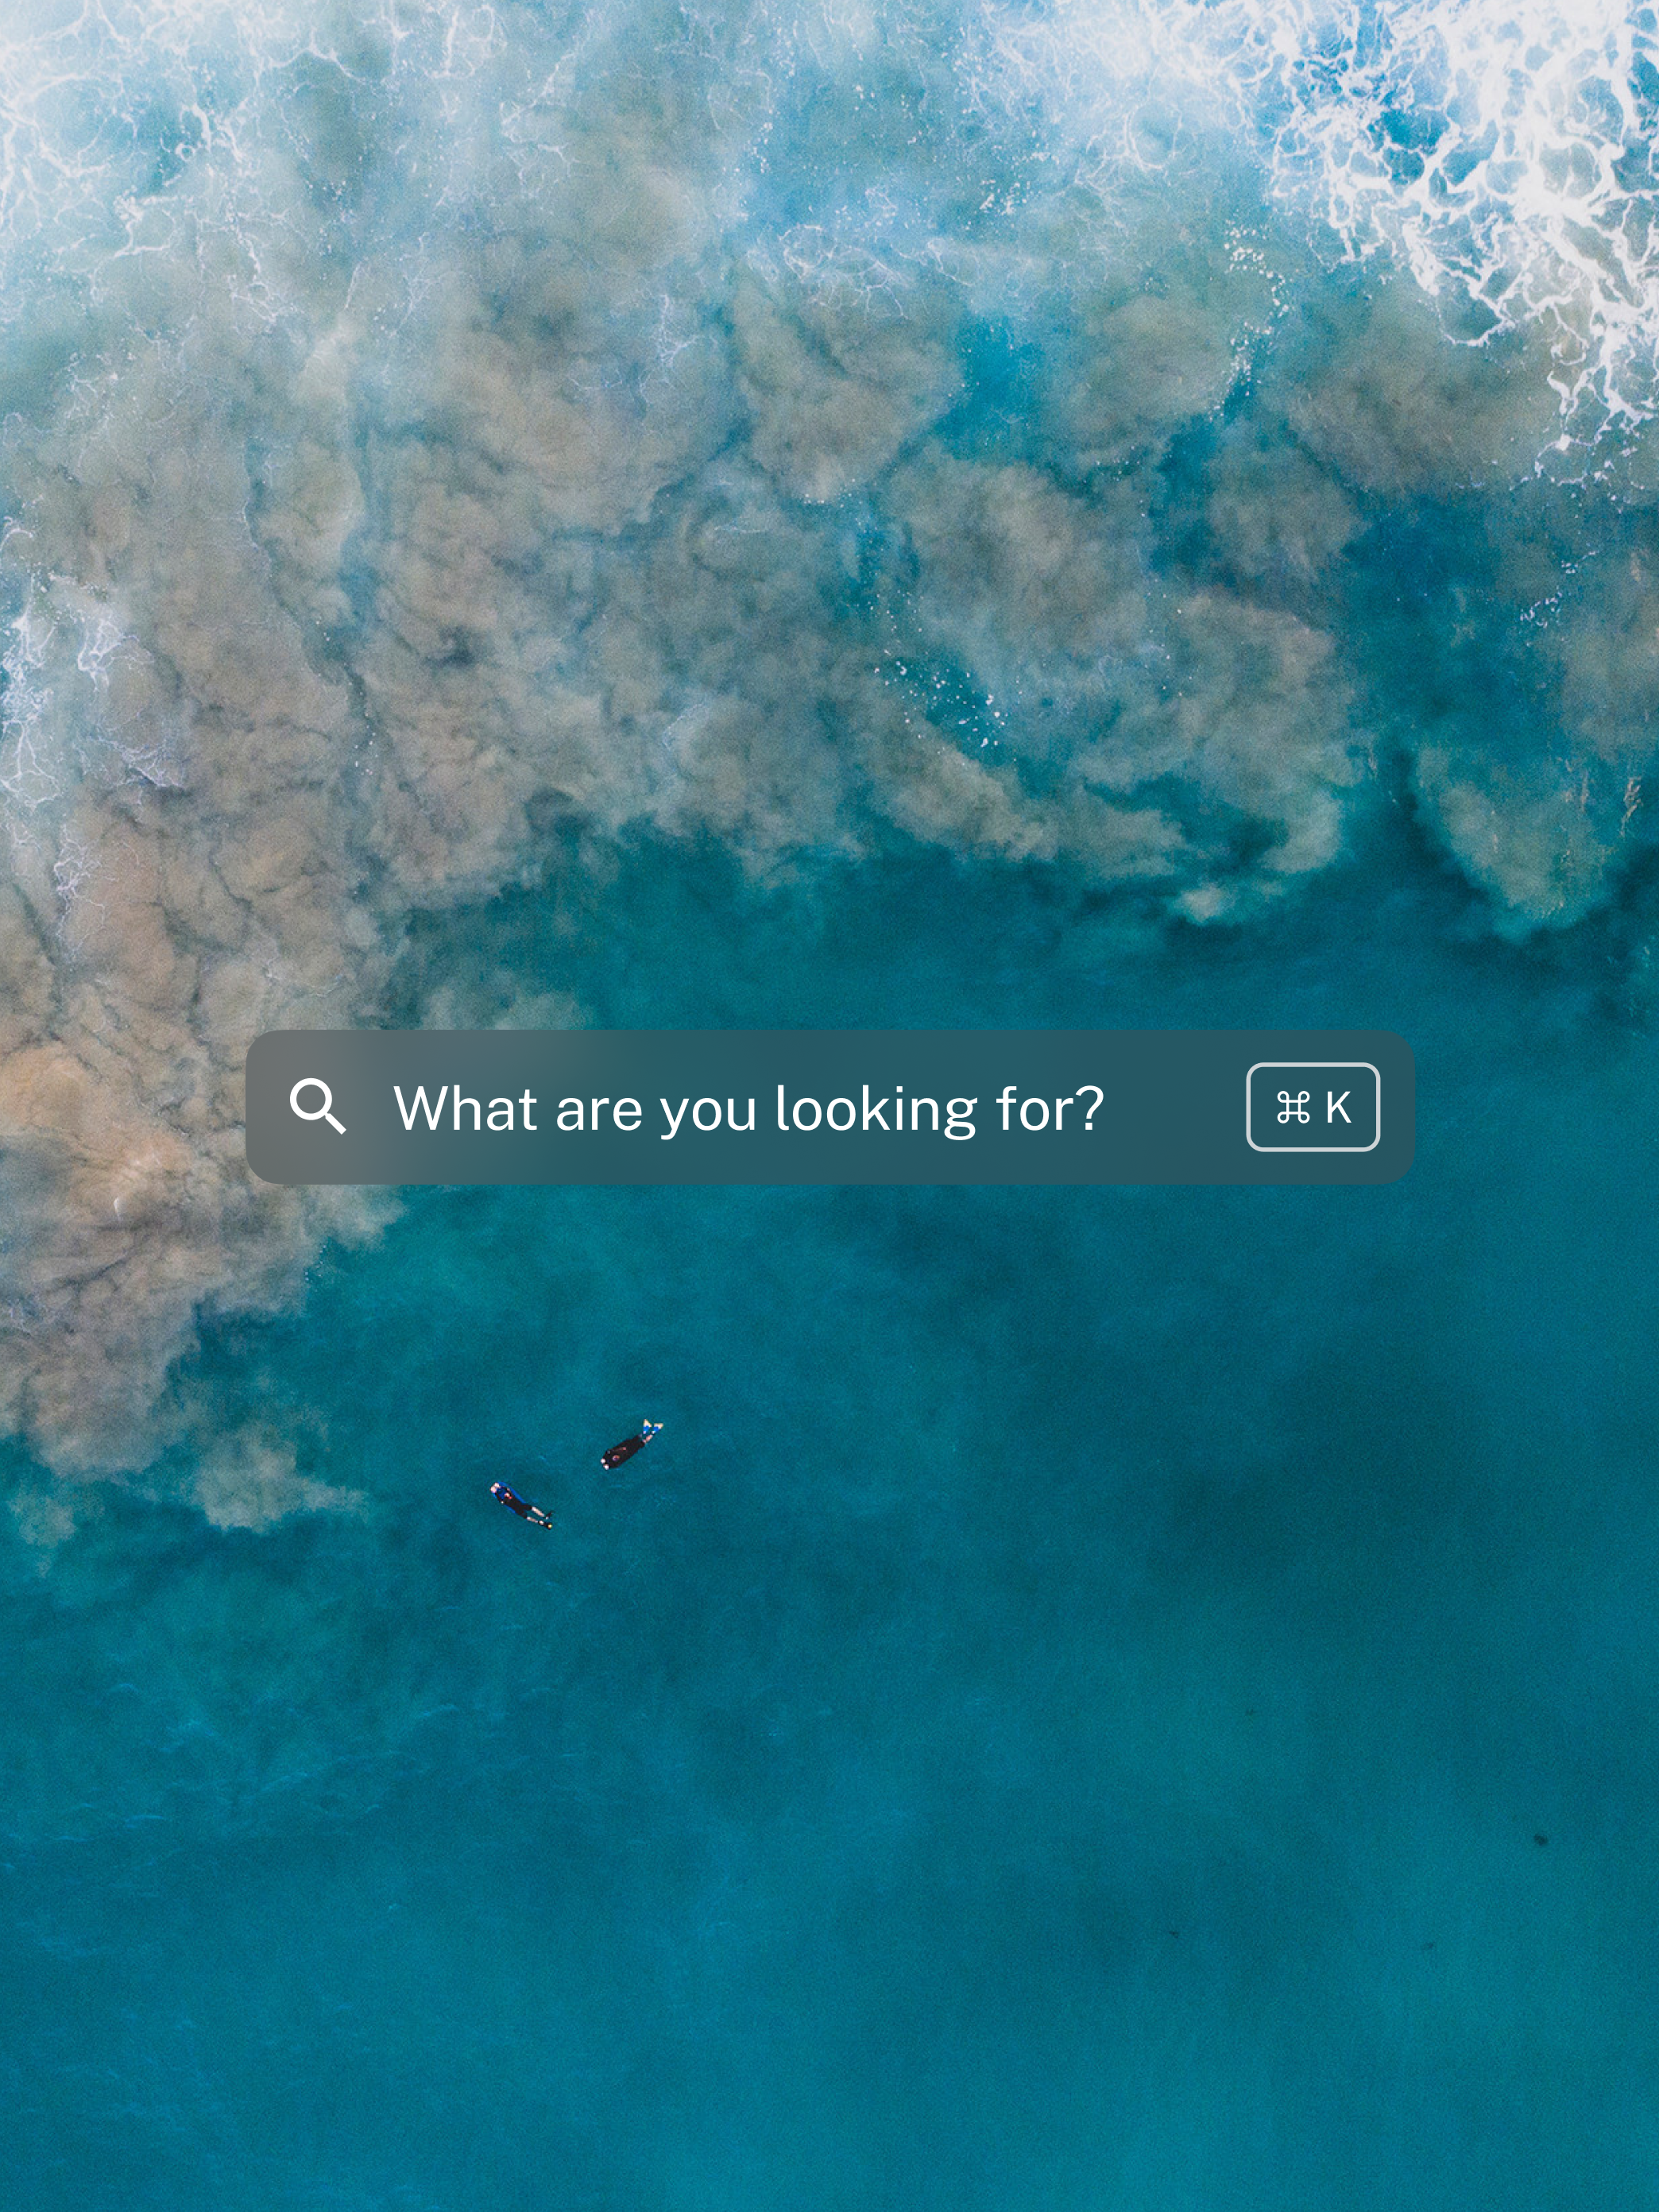 DestinationNSW search UI overlaid on an ocean landscape image